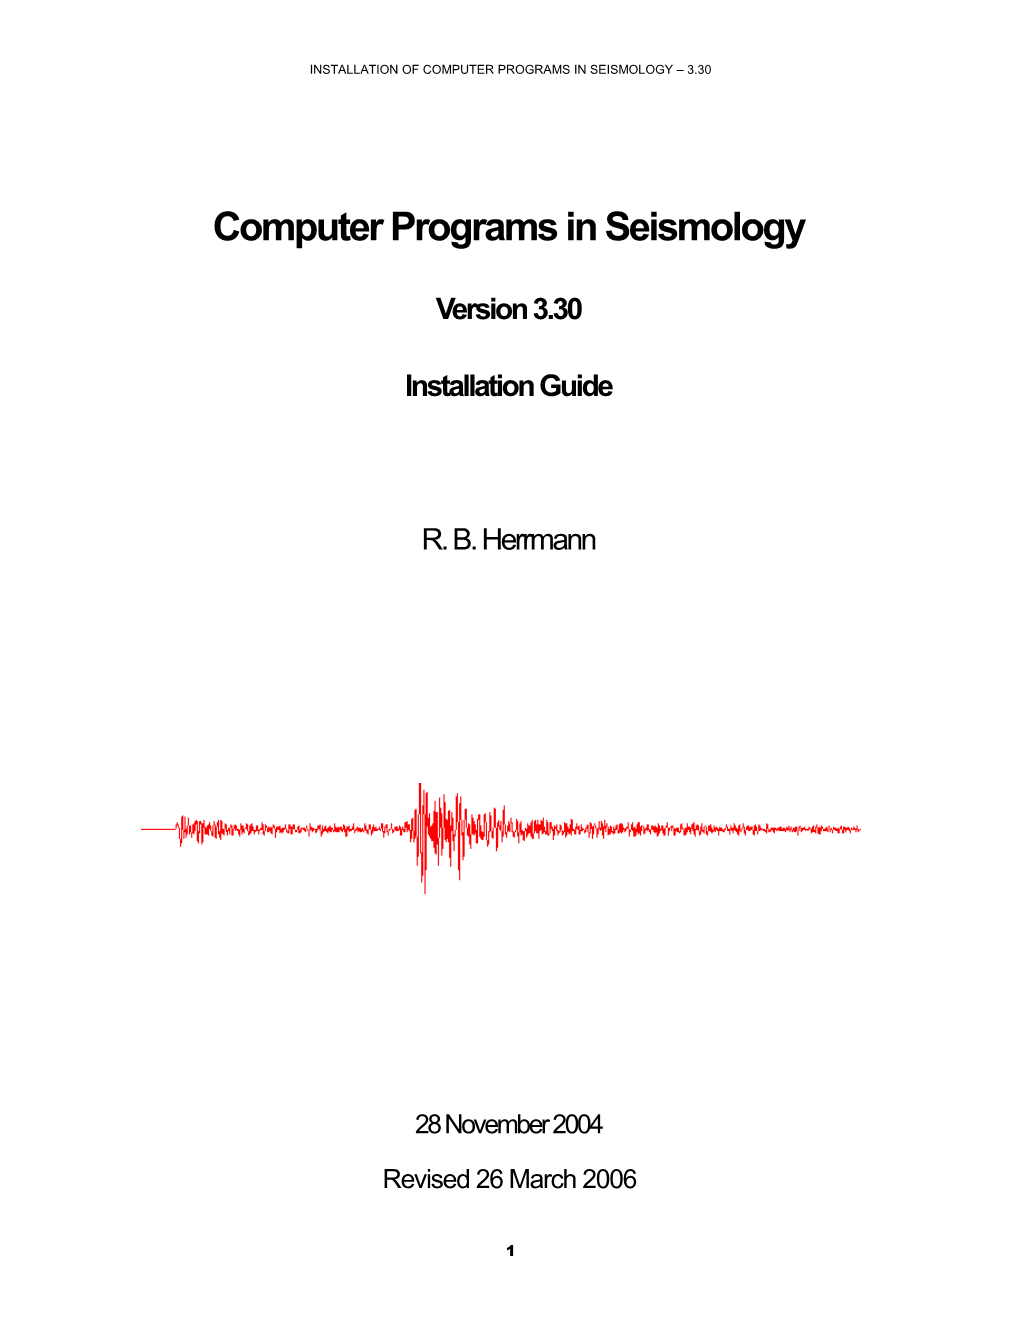 Installation of Computer Programs in Seismology 3.30